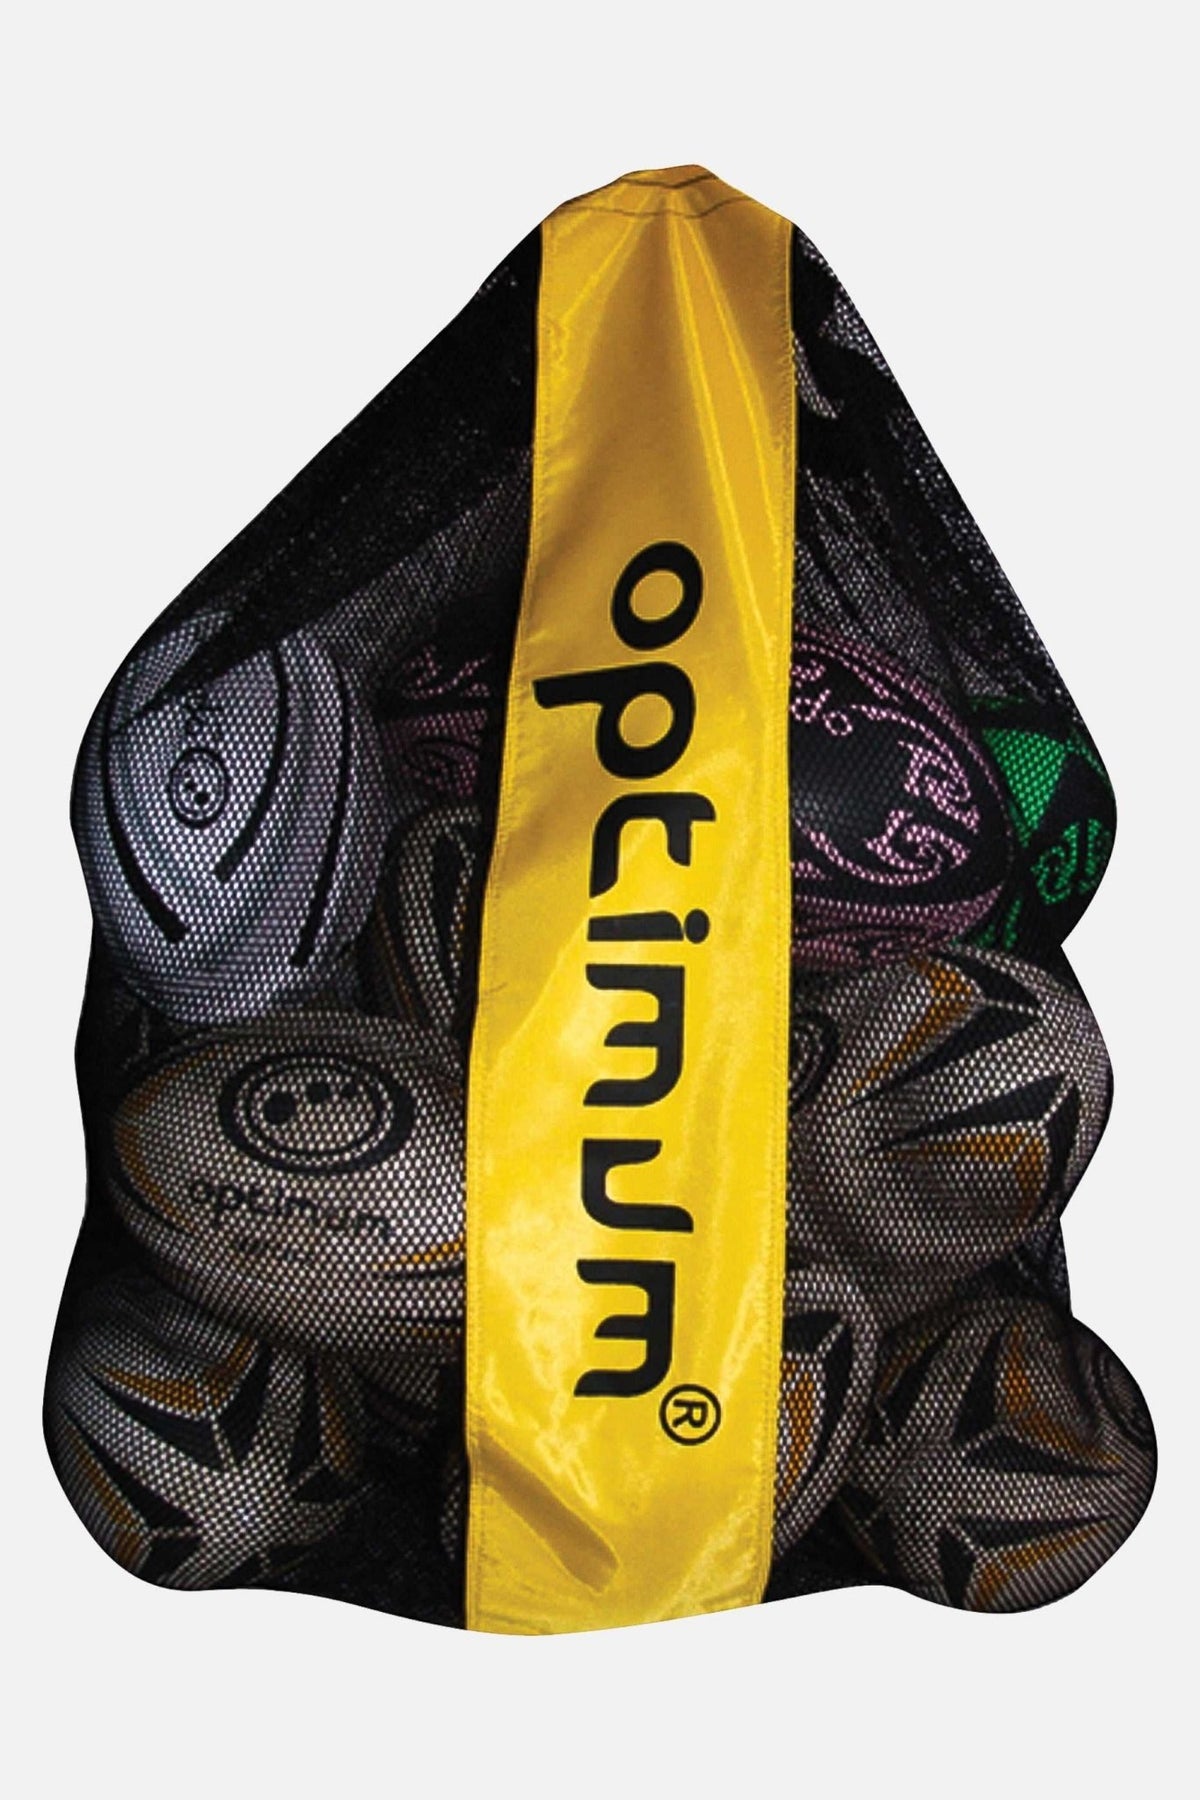 Ball Carrier Bag Durable Mesh Rugby Balls Organiser - Optimum